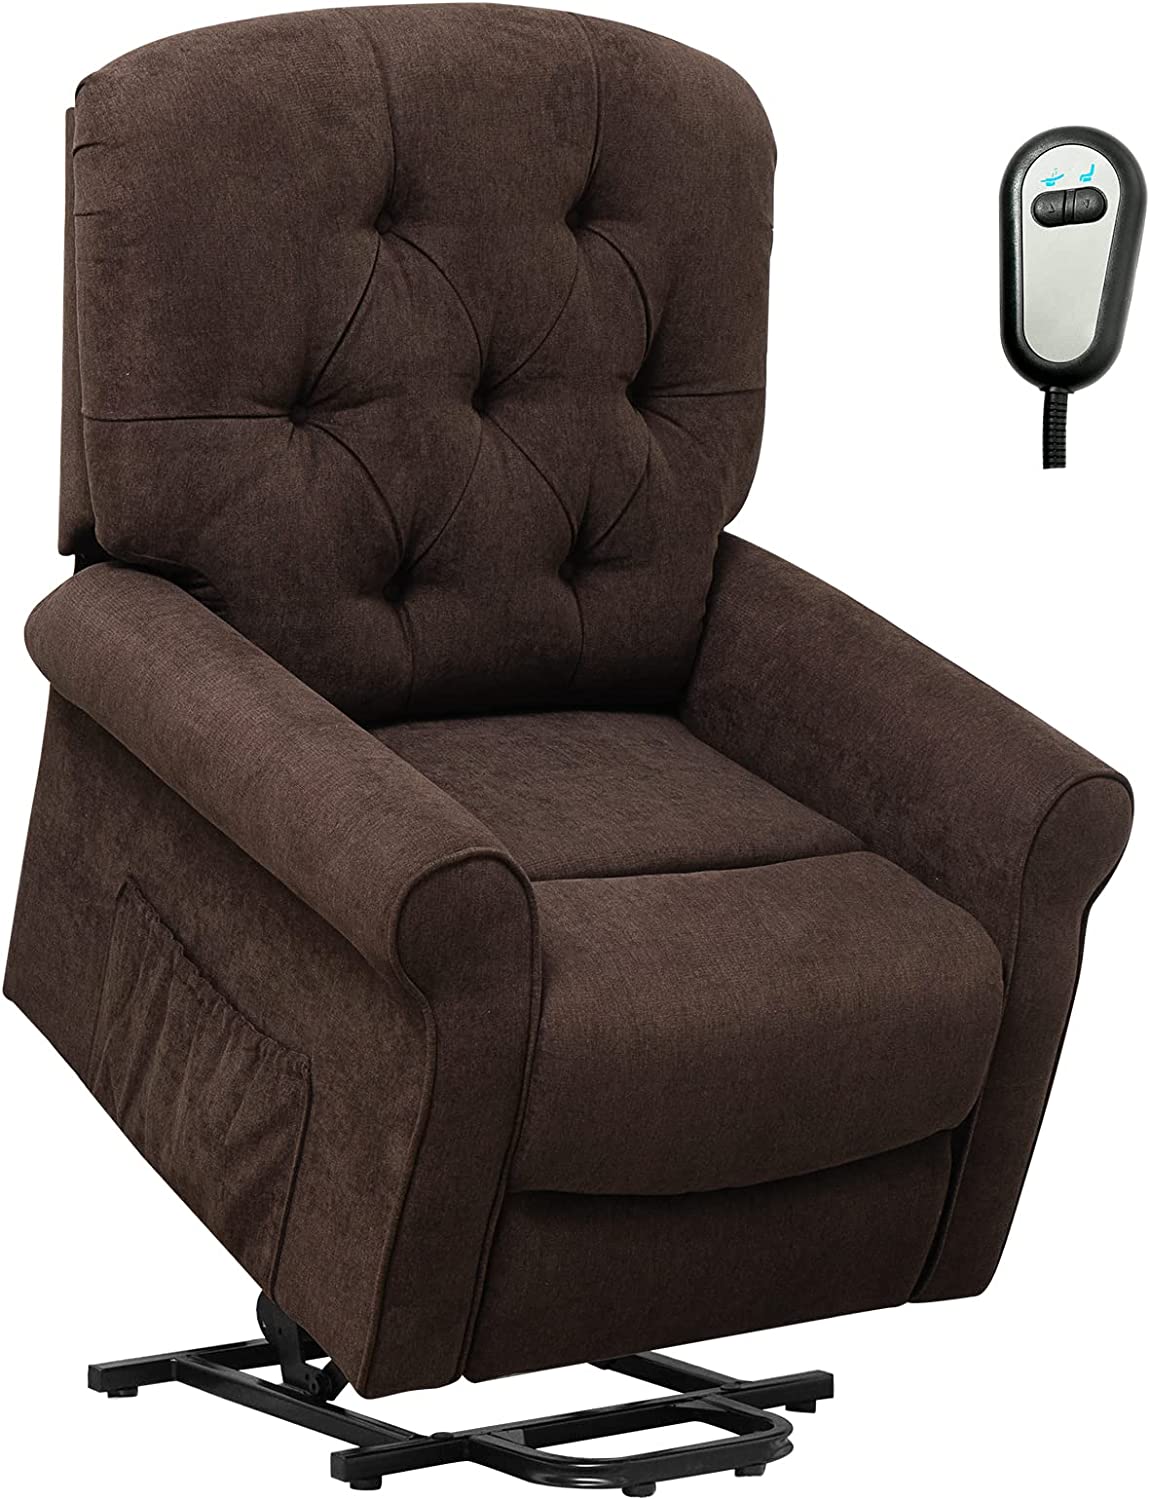 Giantex Power Lift Chair Electric Recliner for Elderly, Adjustable Backrest Footrest